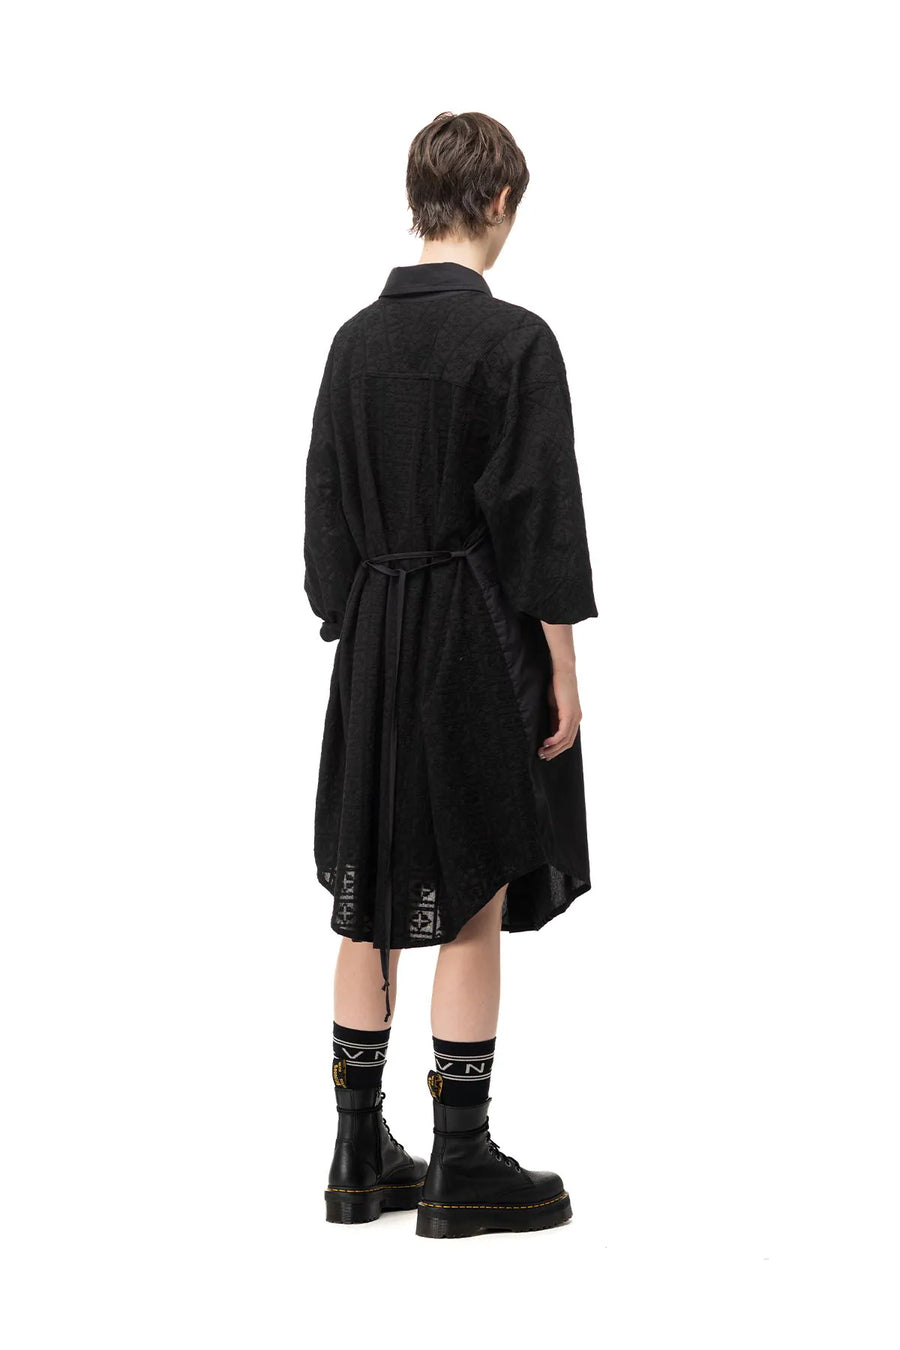 NOM*D | Composite Shirt Dress - Cross-Stitch